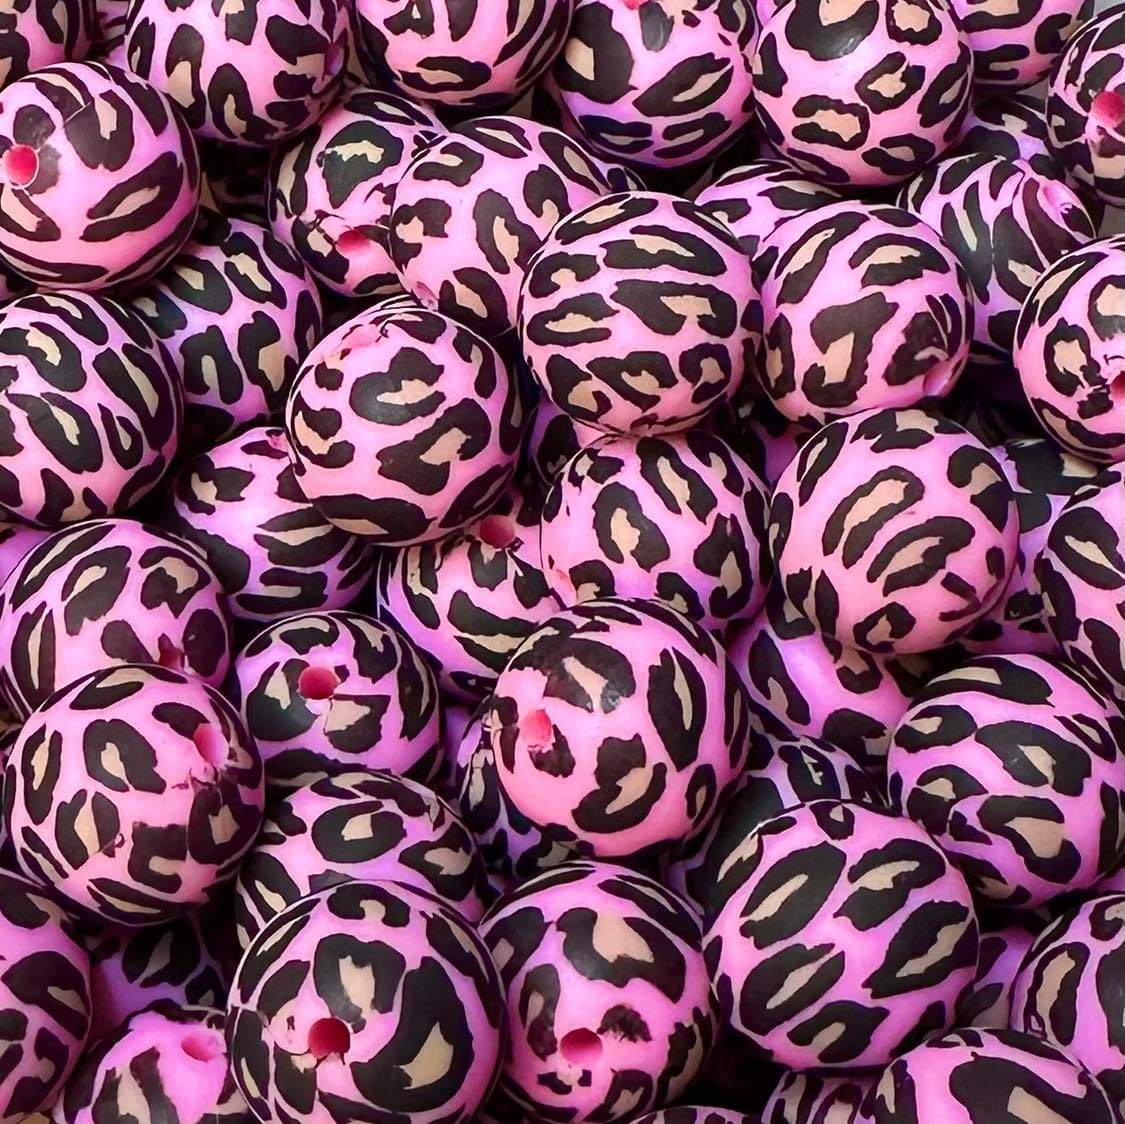 15 mm Printed Silicone Bead, Pink Cheetah